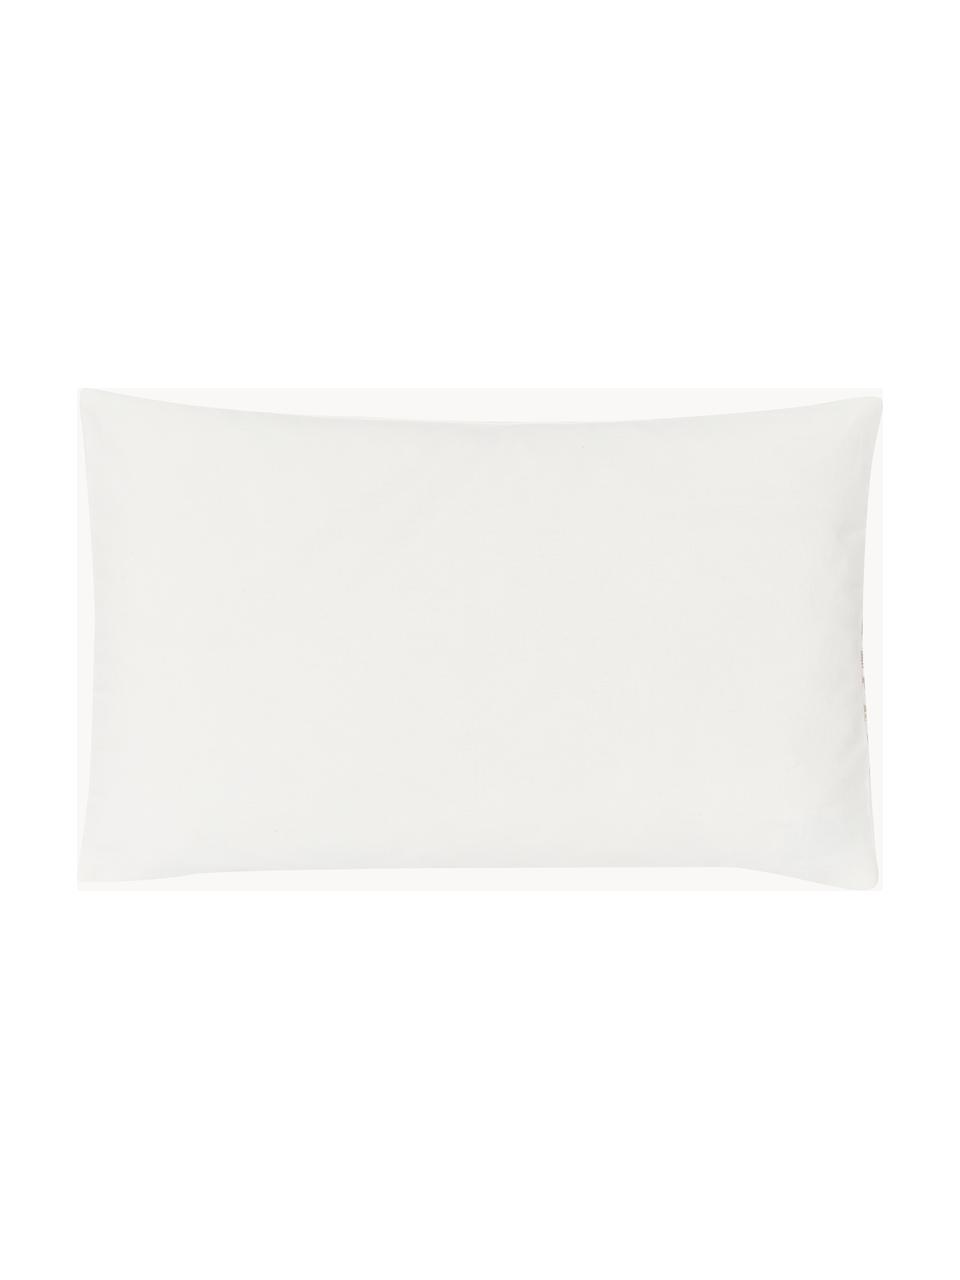 Vyšívaný povlak na polštář s norským vzorem Orkney, 100 % bavlna, Béžová, krémově bílá, Š 30 cm, D 50 cm